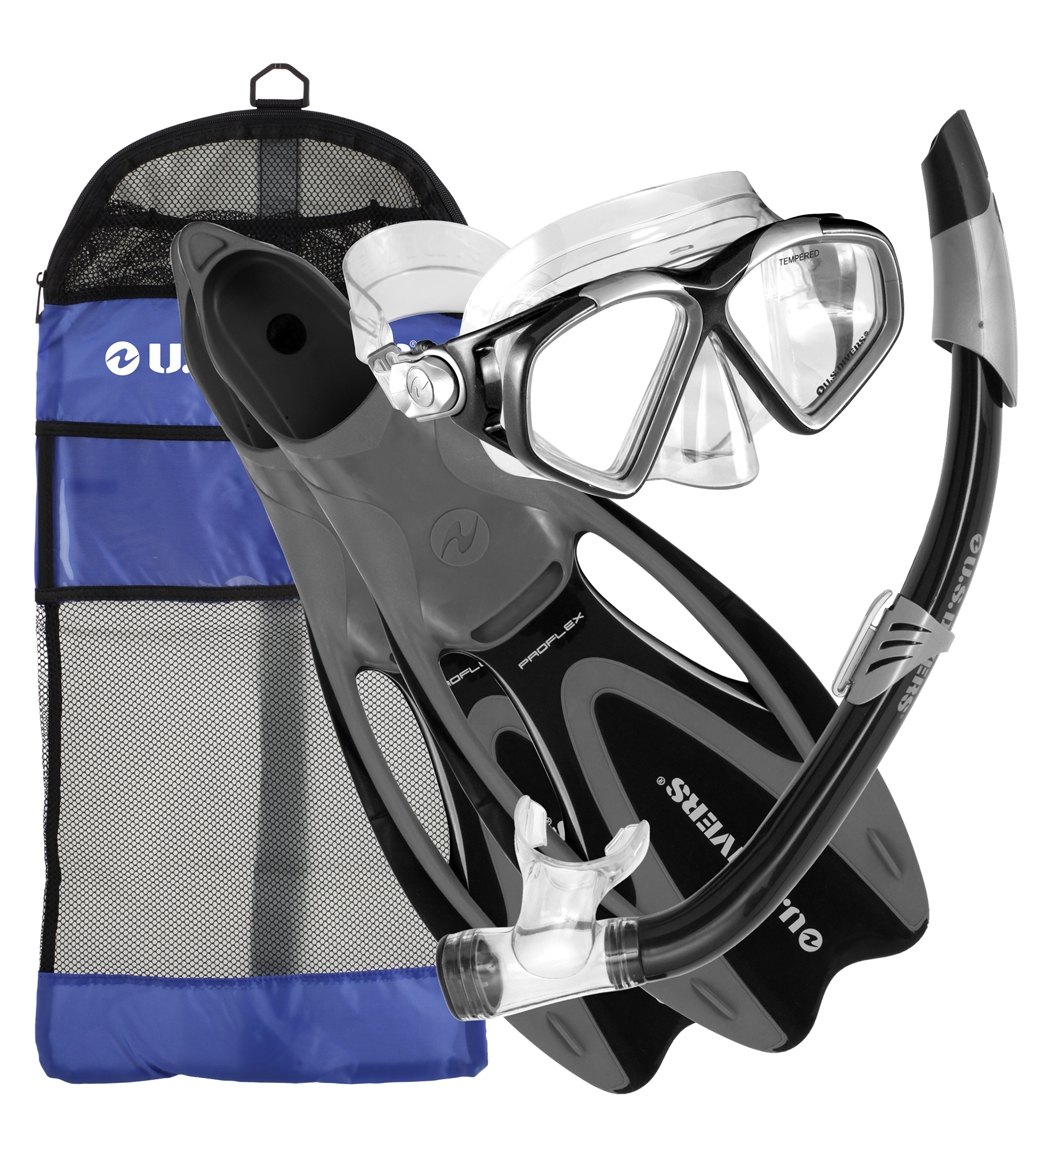 U.s. Divers Cozumel Mask / Seabreeze Snorkel Proflex Fins Gear Bag Set - Black Medium/Large Plastic/Rubber/Silicone - Swimoutlet.com